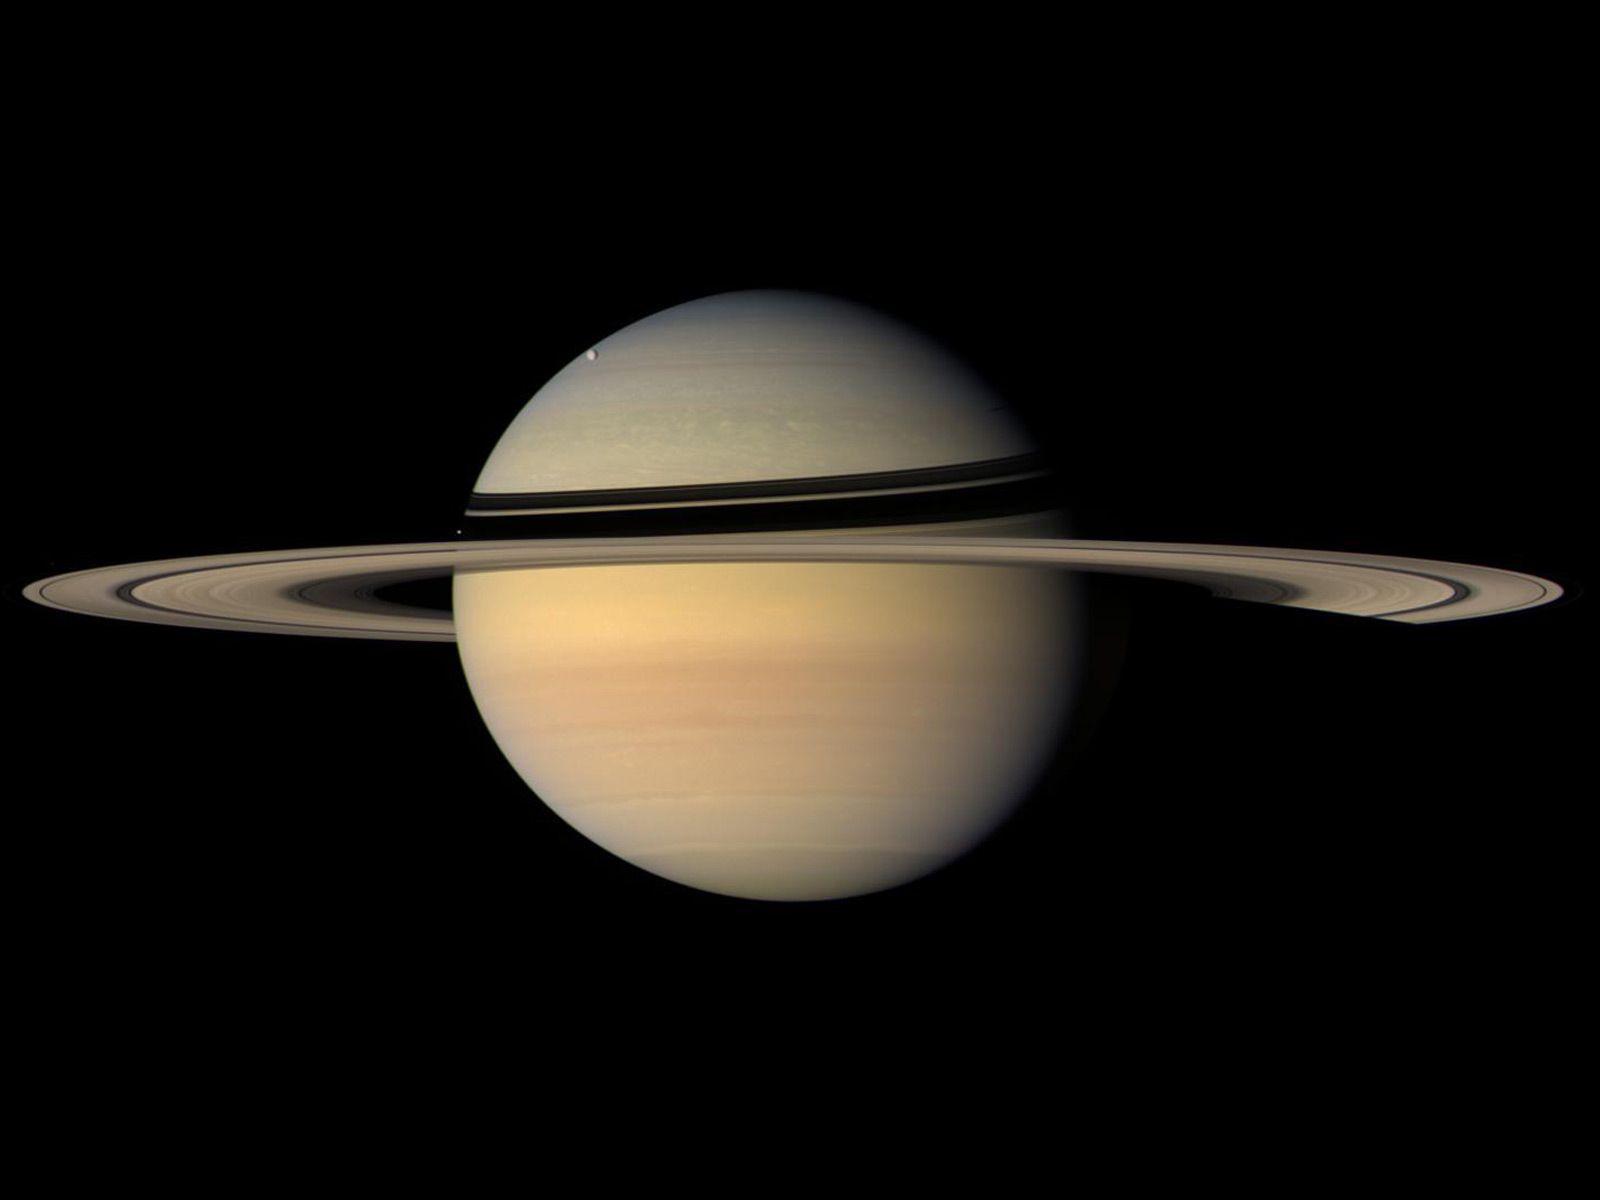 Кольцо спутников. Планета Сатурн Кассини. Сатурн Планета НАСА. Нептун Кассини. Сатурн Планета фото.